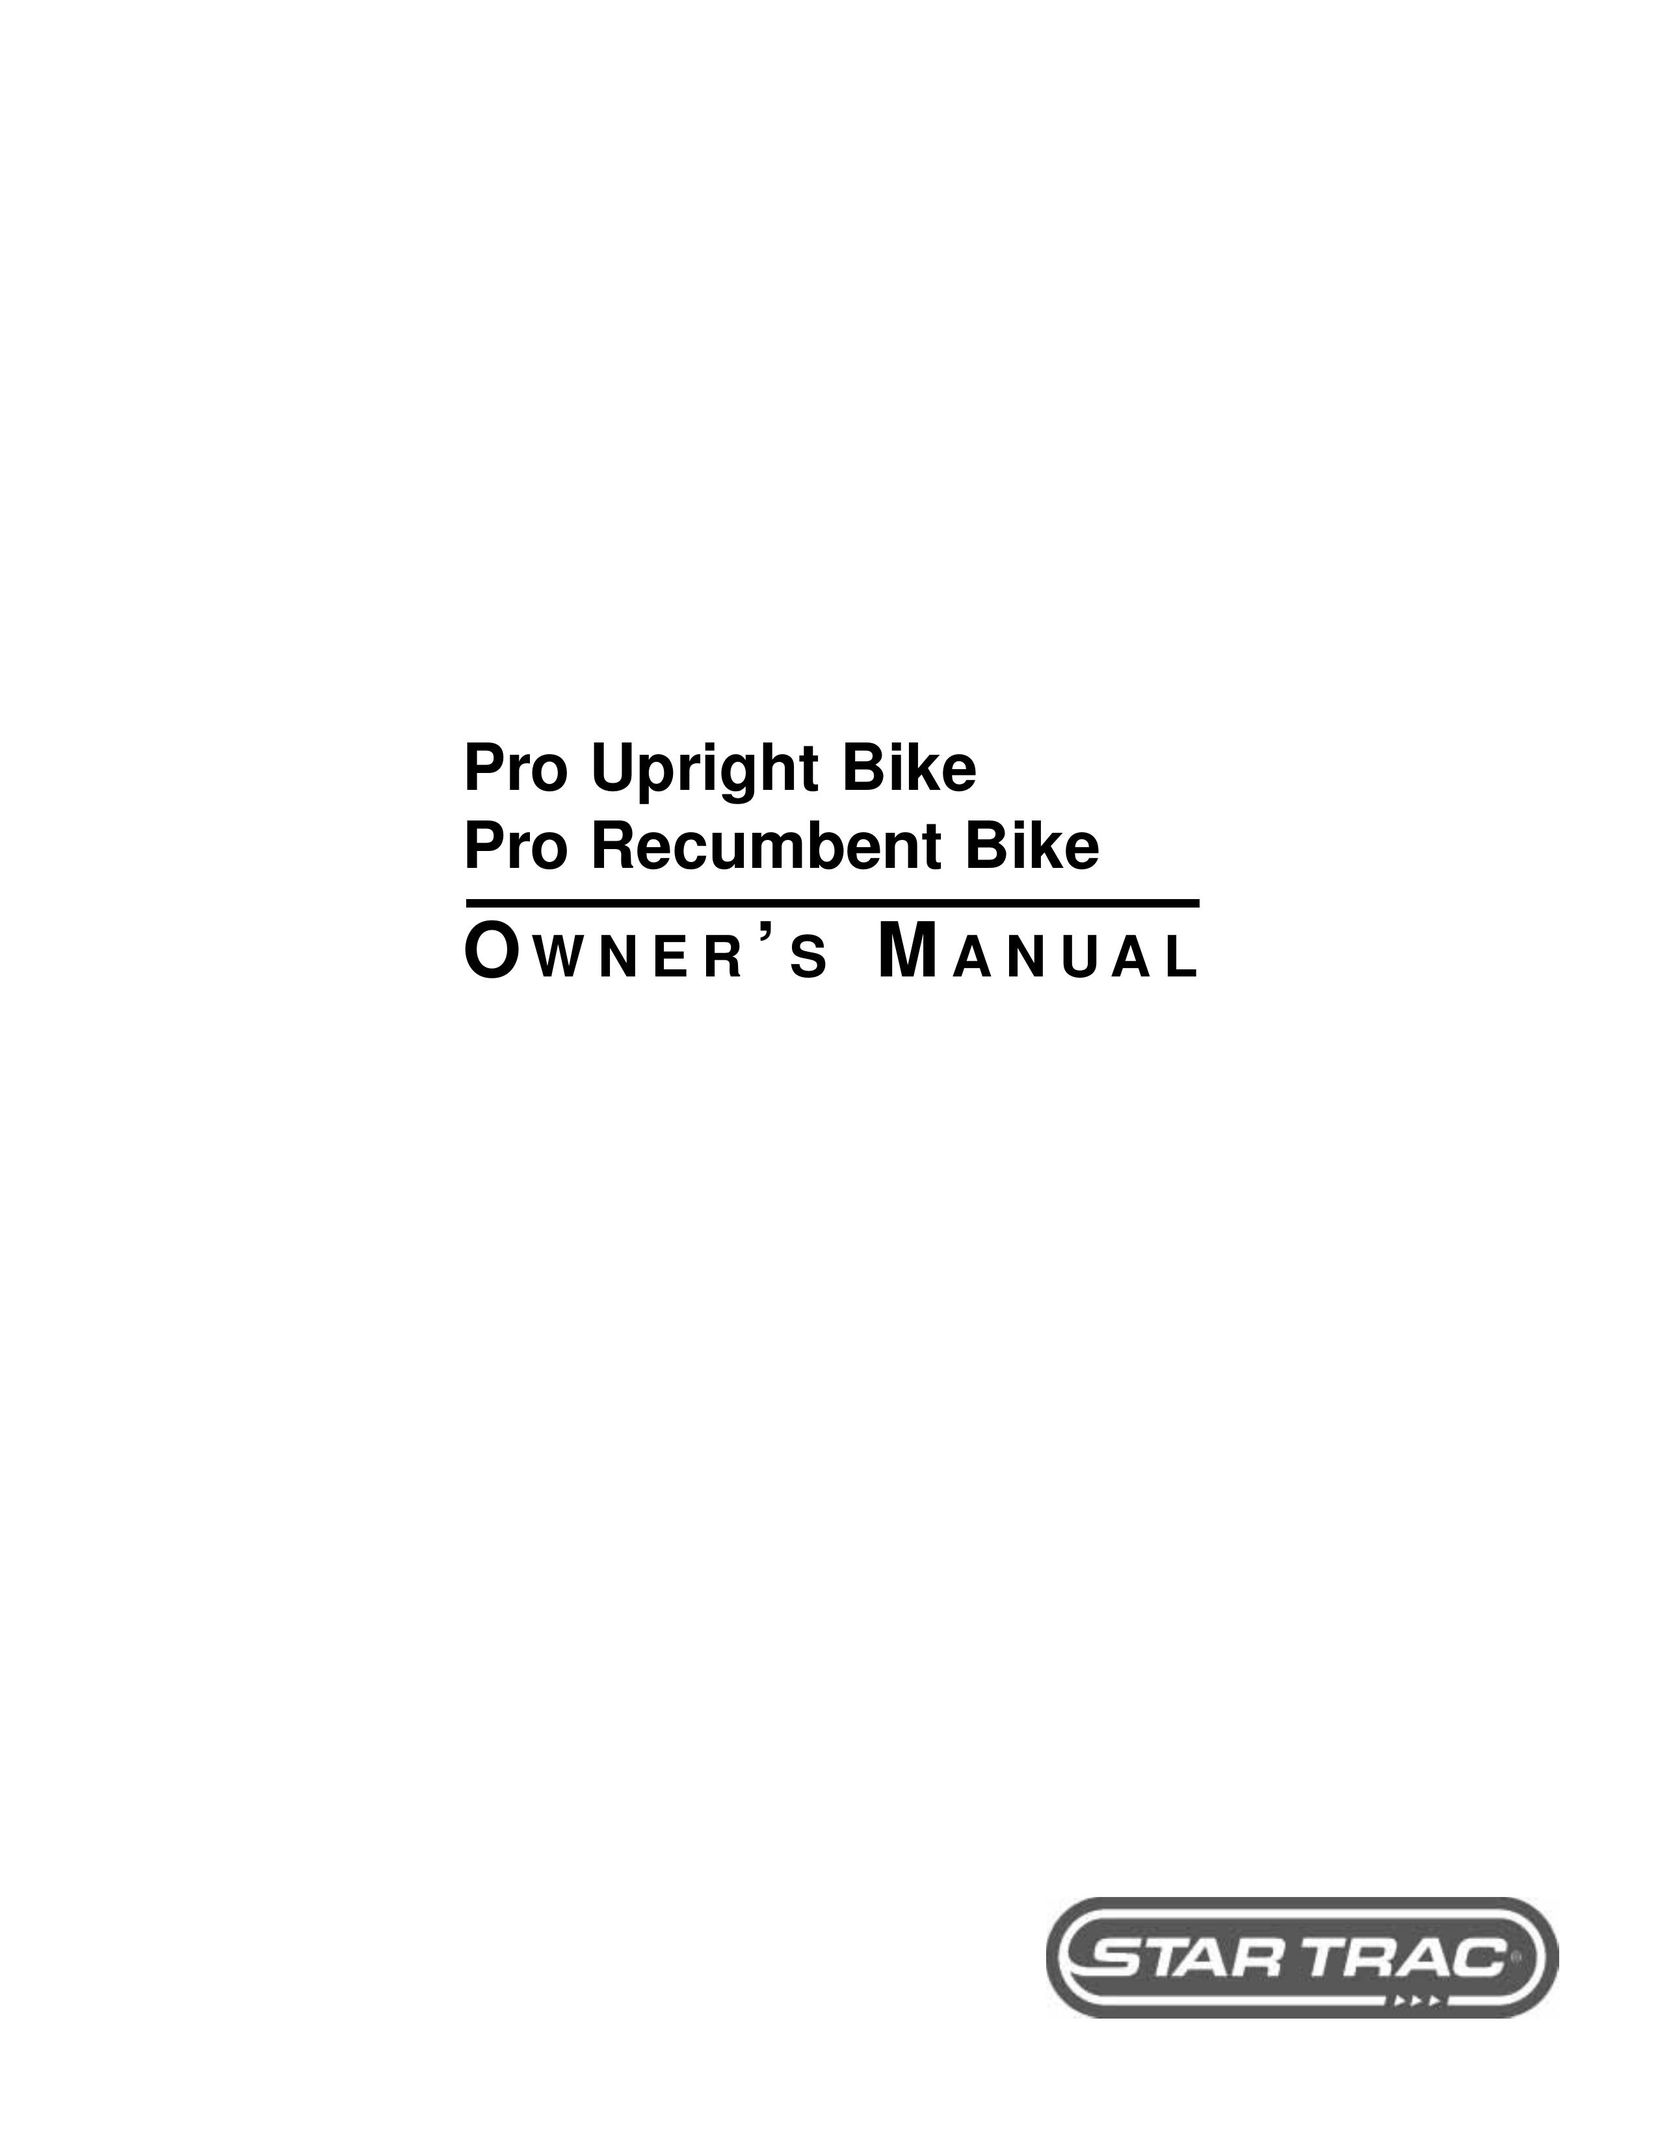 Star Trac Pro Upright Bike Home Gym User Manual